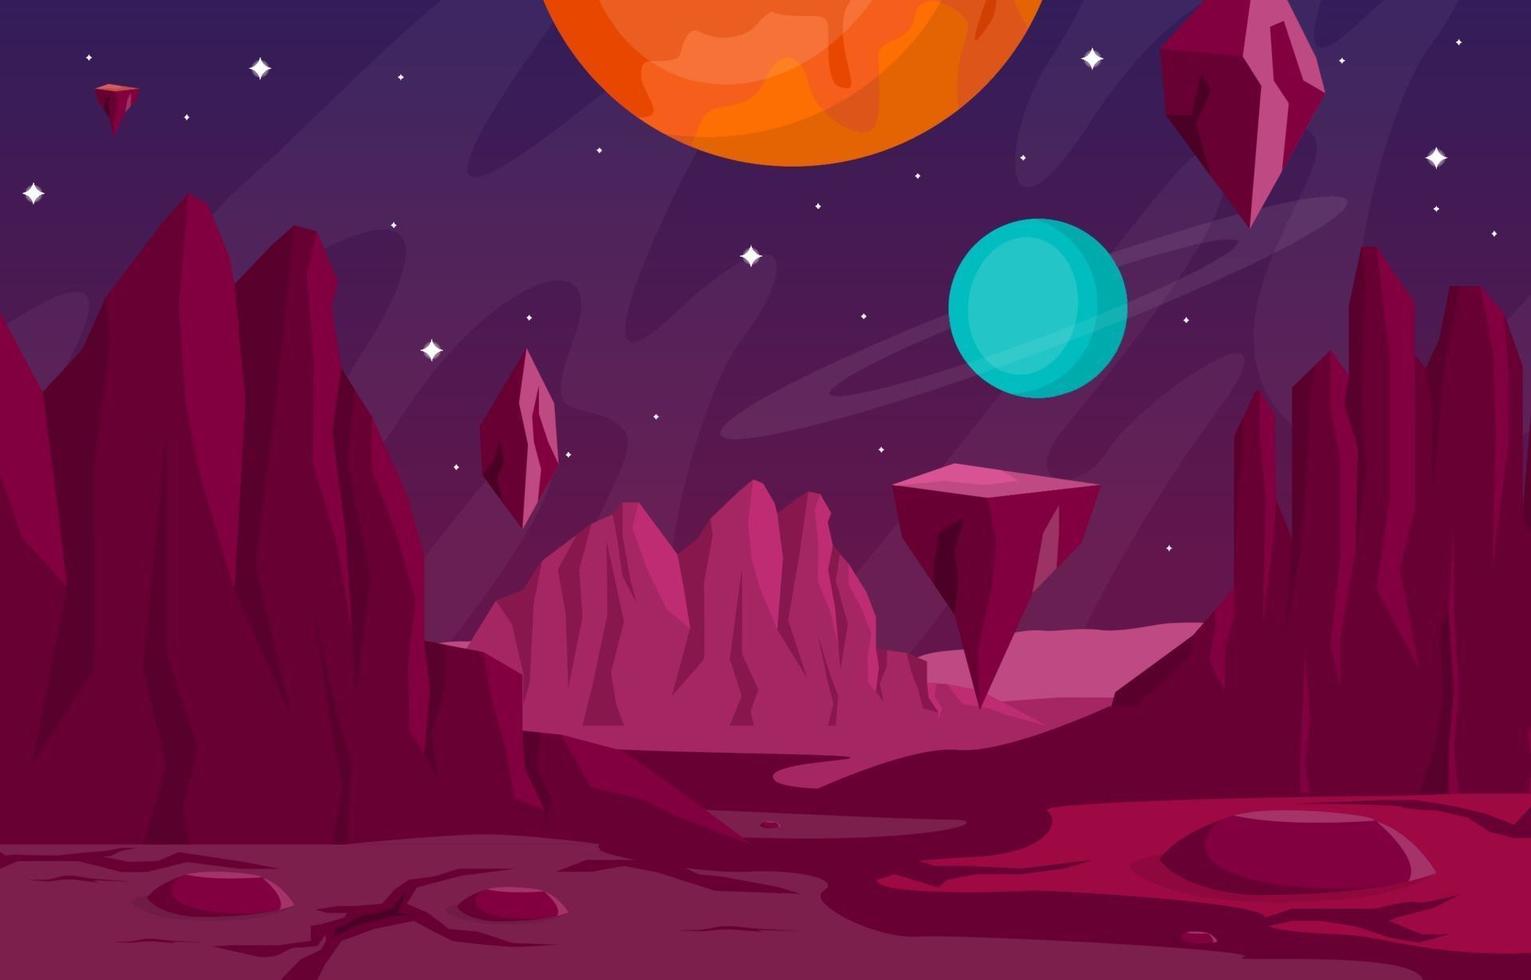 Landscape Surface of Science Fiction Fantasy Planet Illustration vector